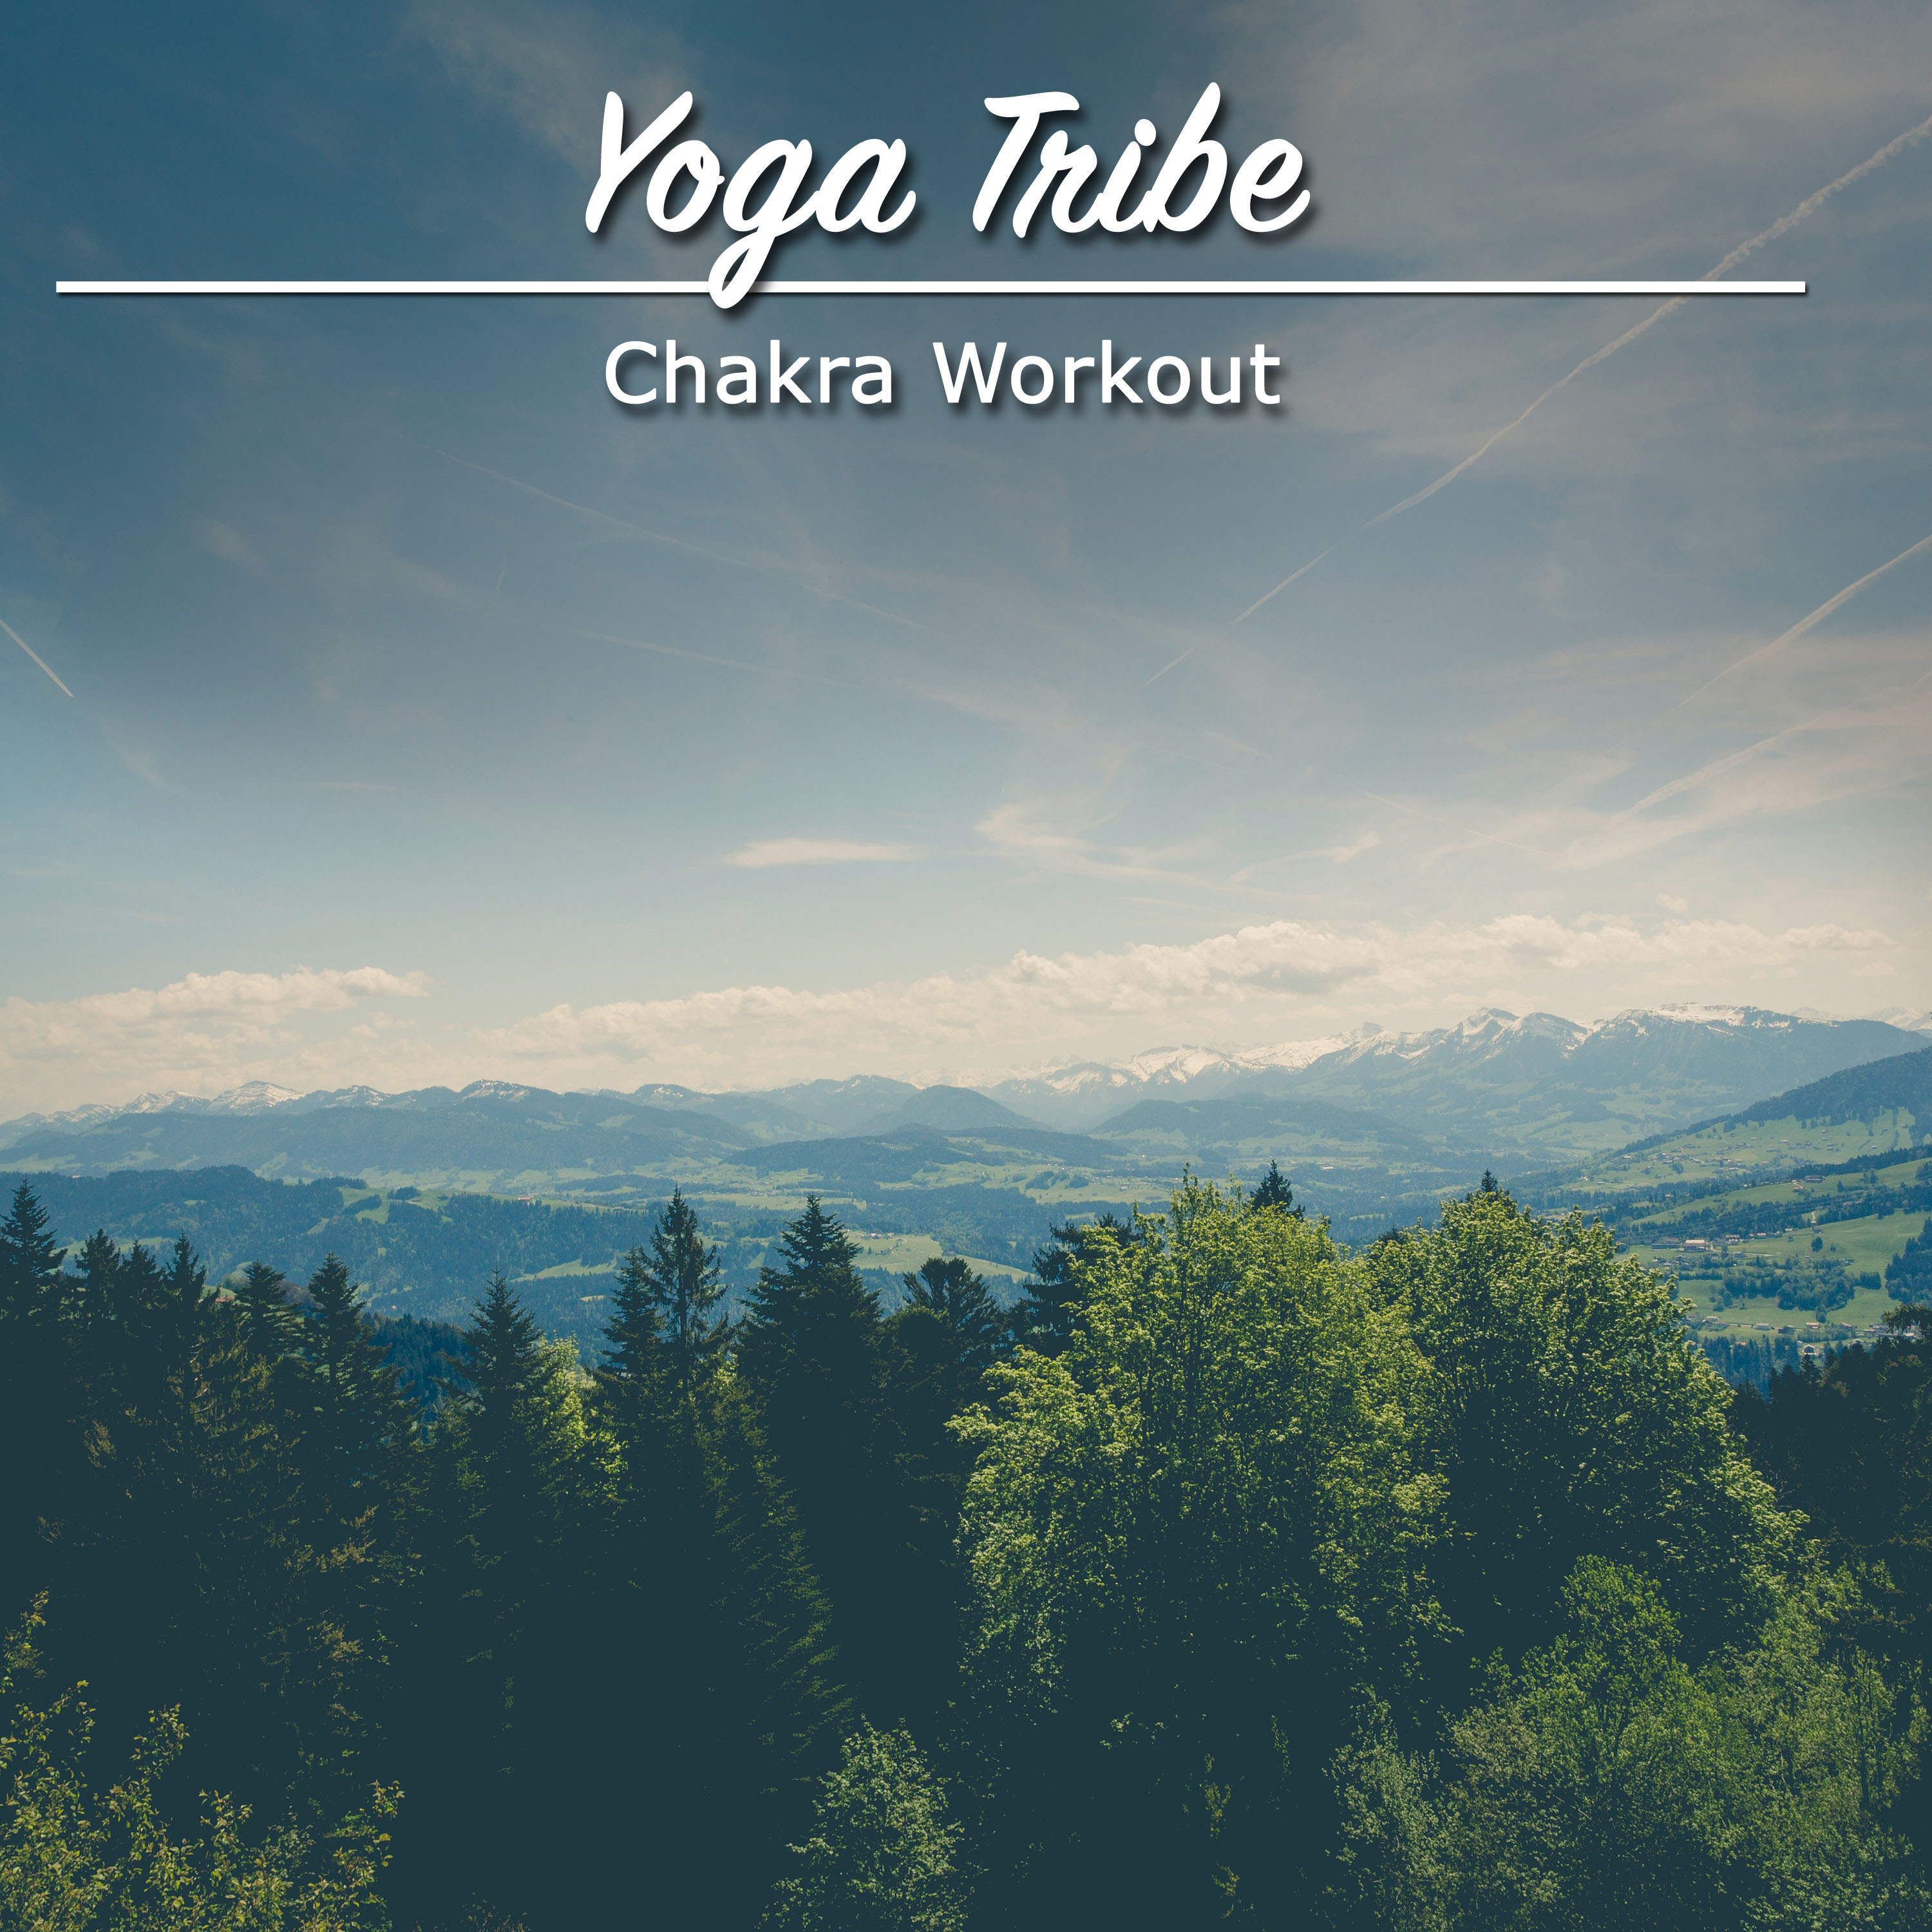 15 Yoga Tribe Chakra Workout Music Songs